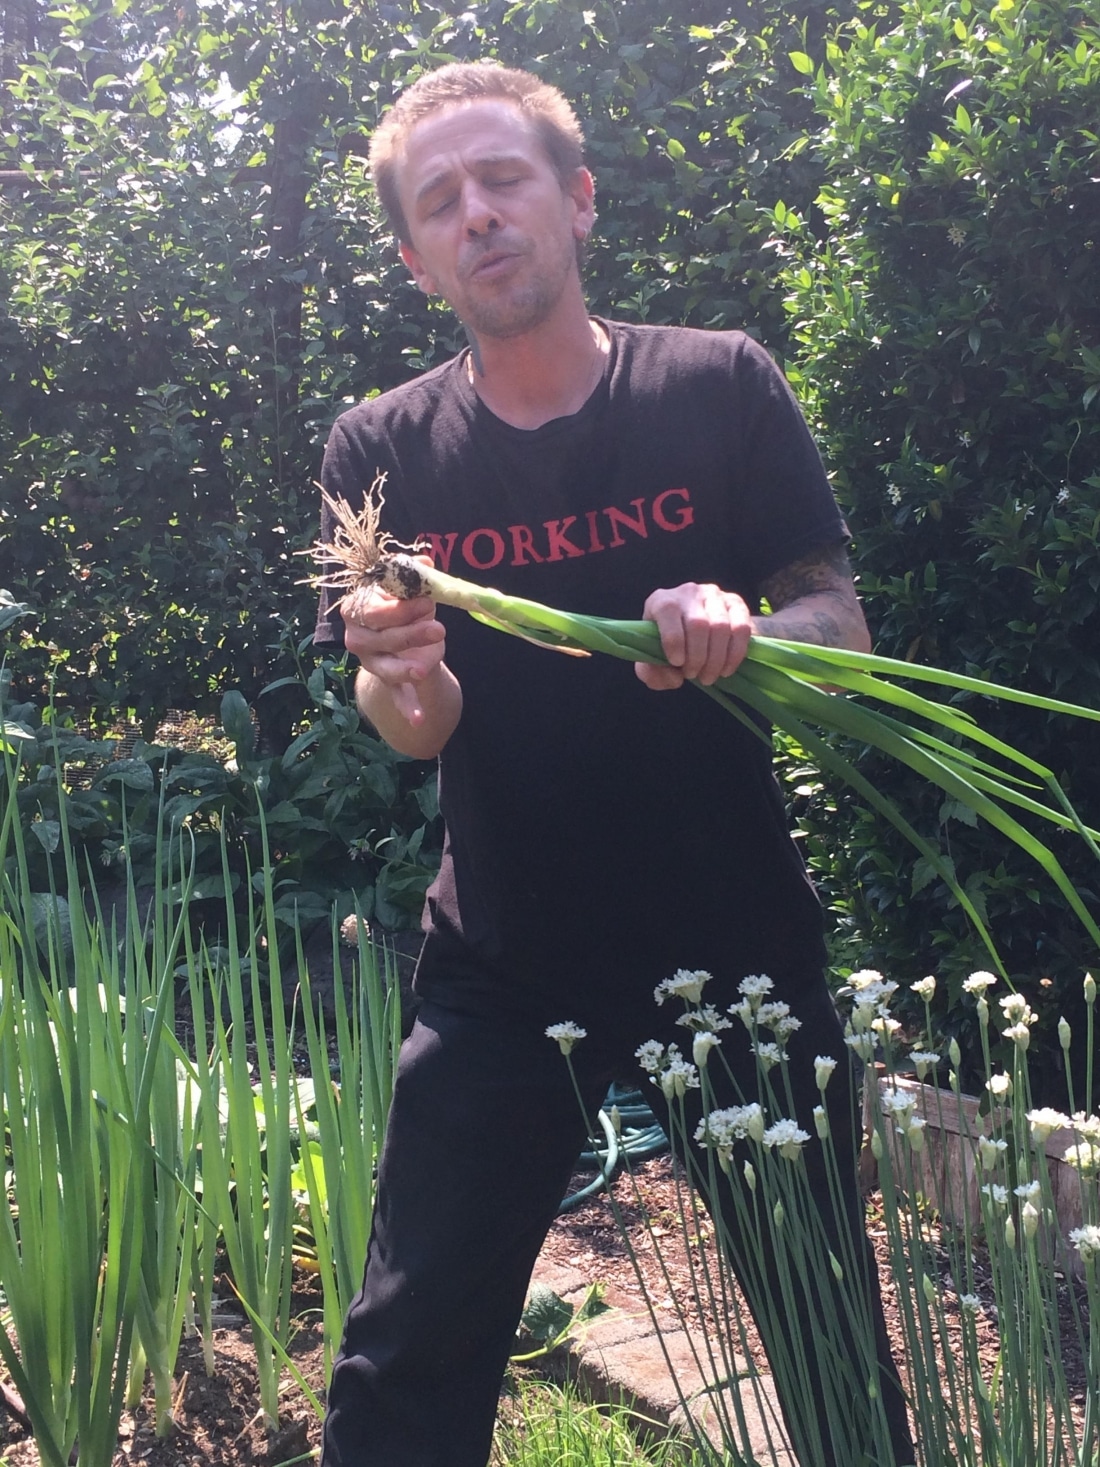 Matt Schmidt, IslandWood’s Banquet Sous Chef, holding green onions in the garden.